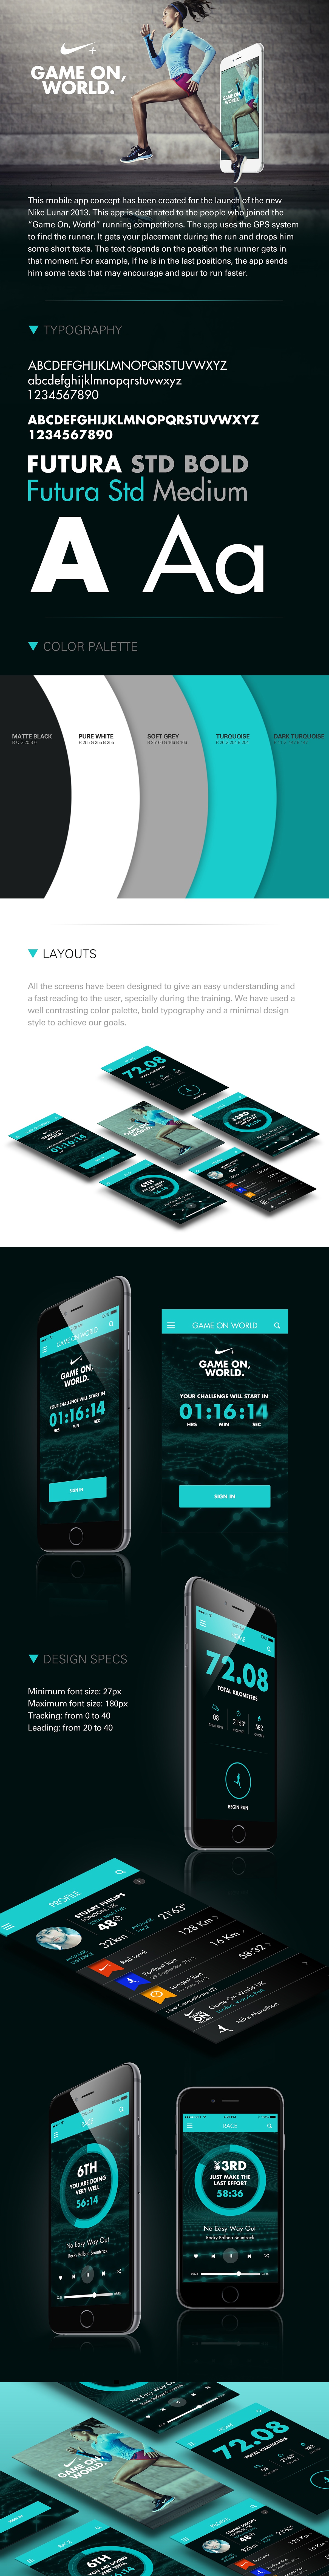 Nike lunar app iphone design running mobile Nike application race concept dark Mockup template icons